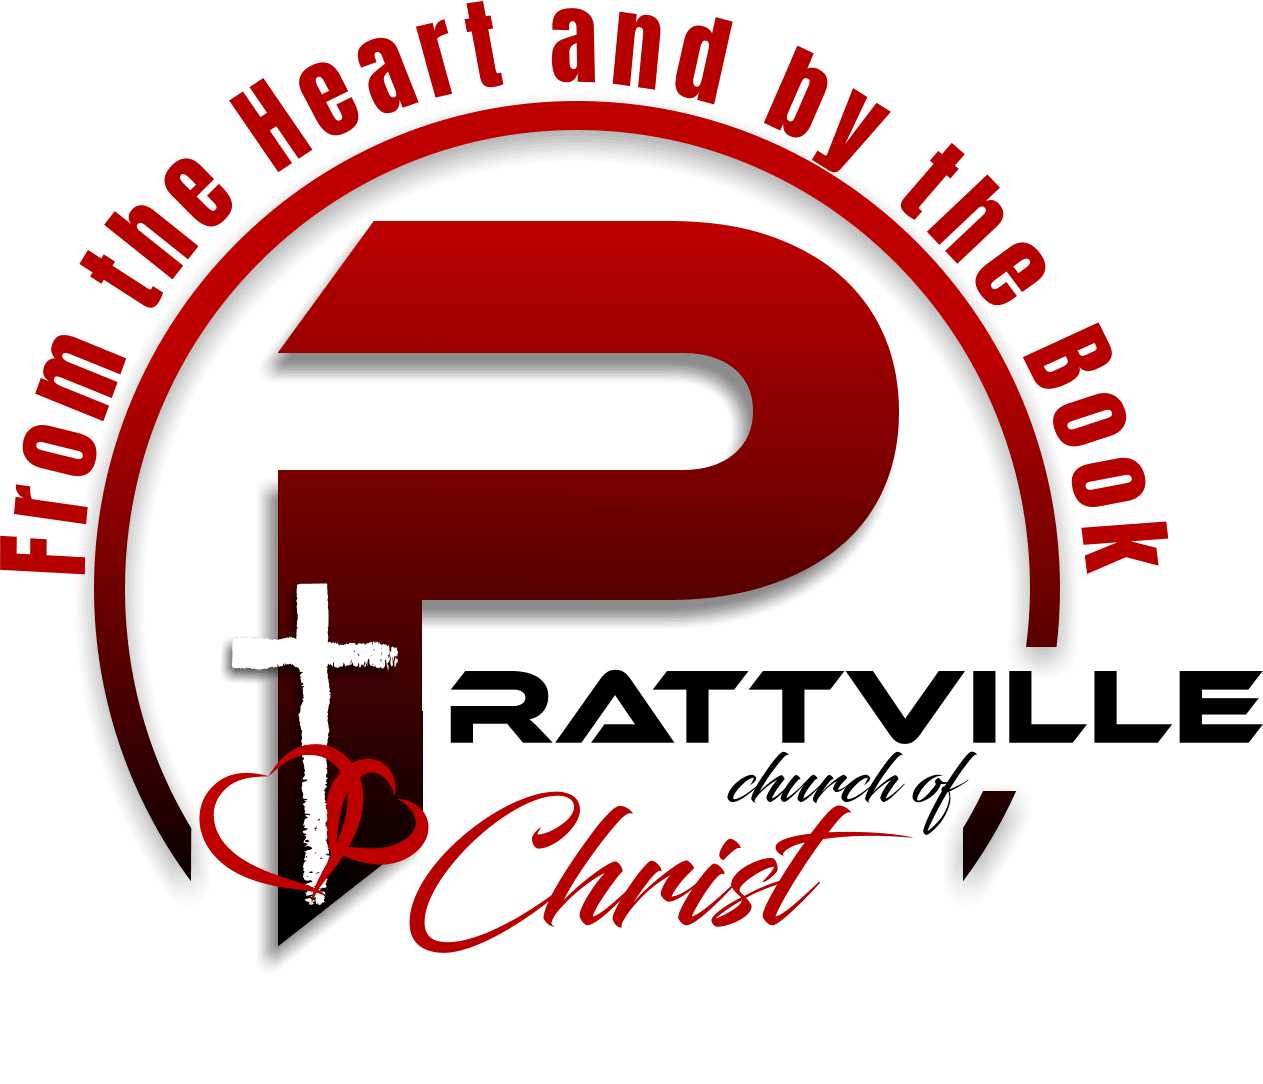 Prattville Church of Christ 